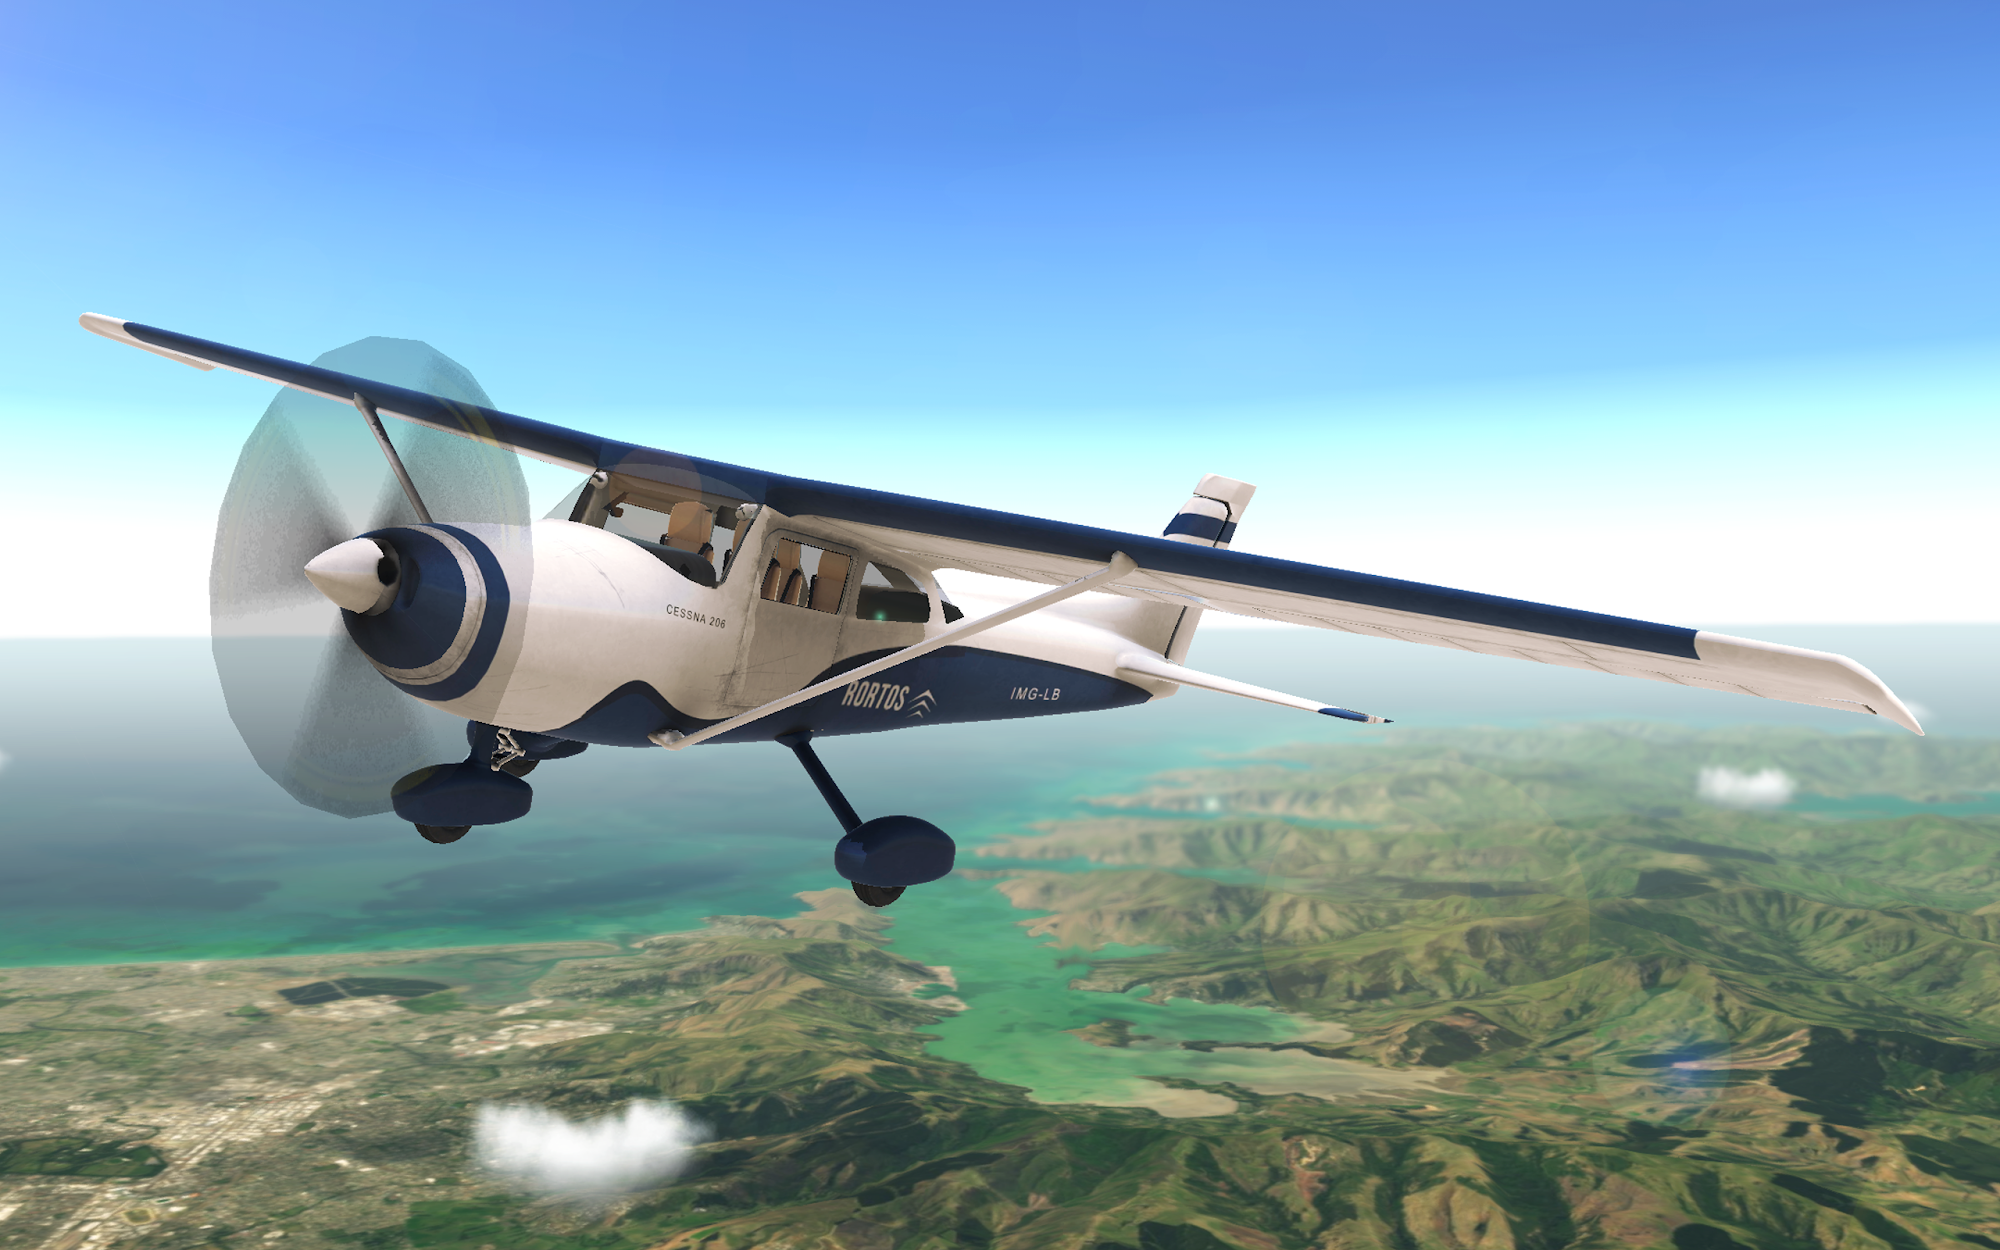 RFS - Real Flight Simulator for Android